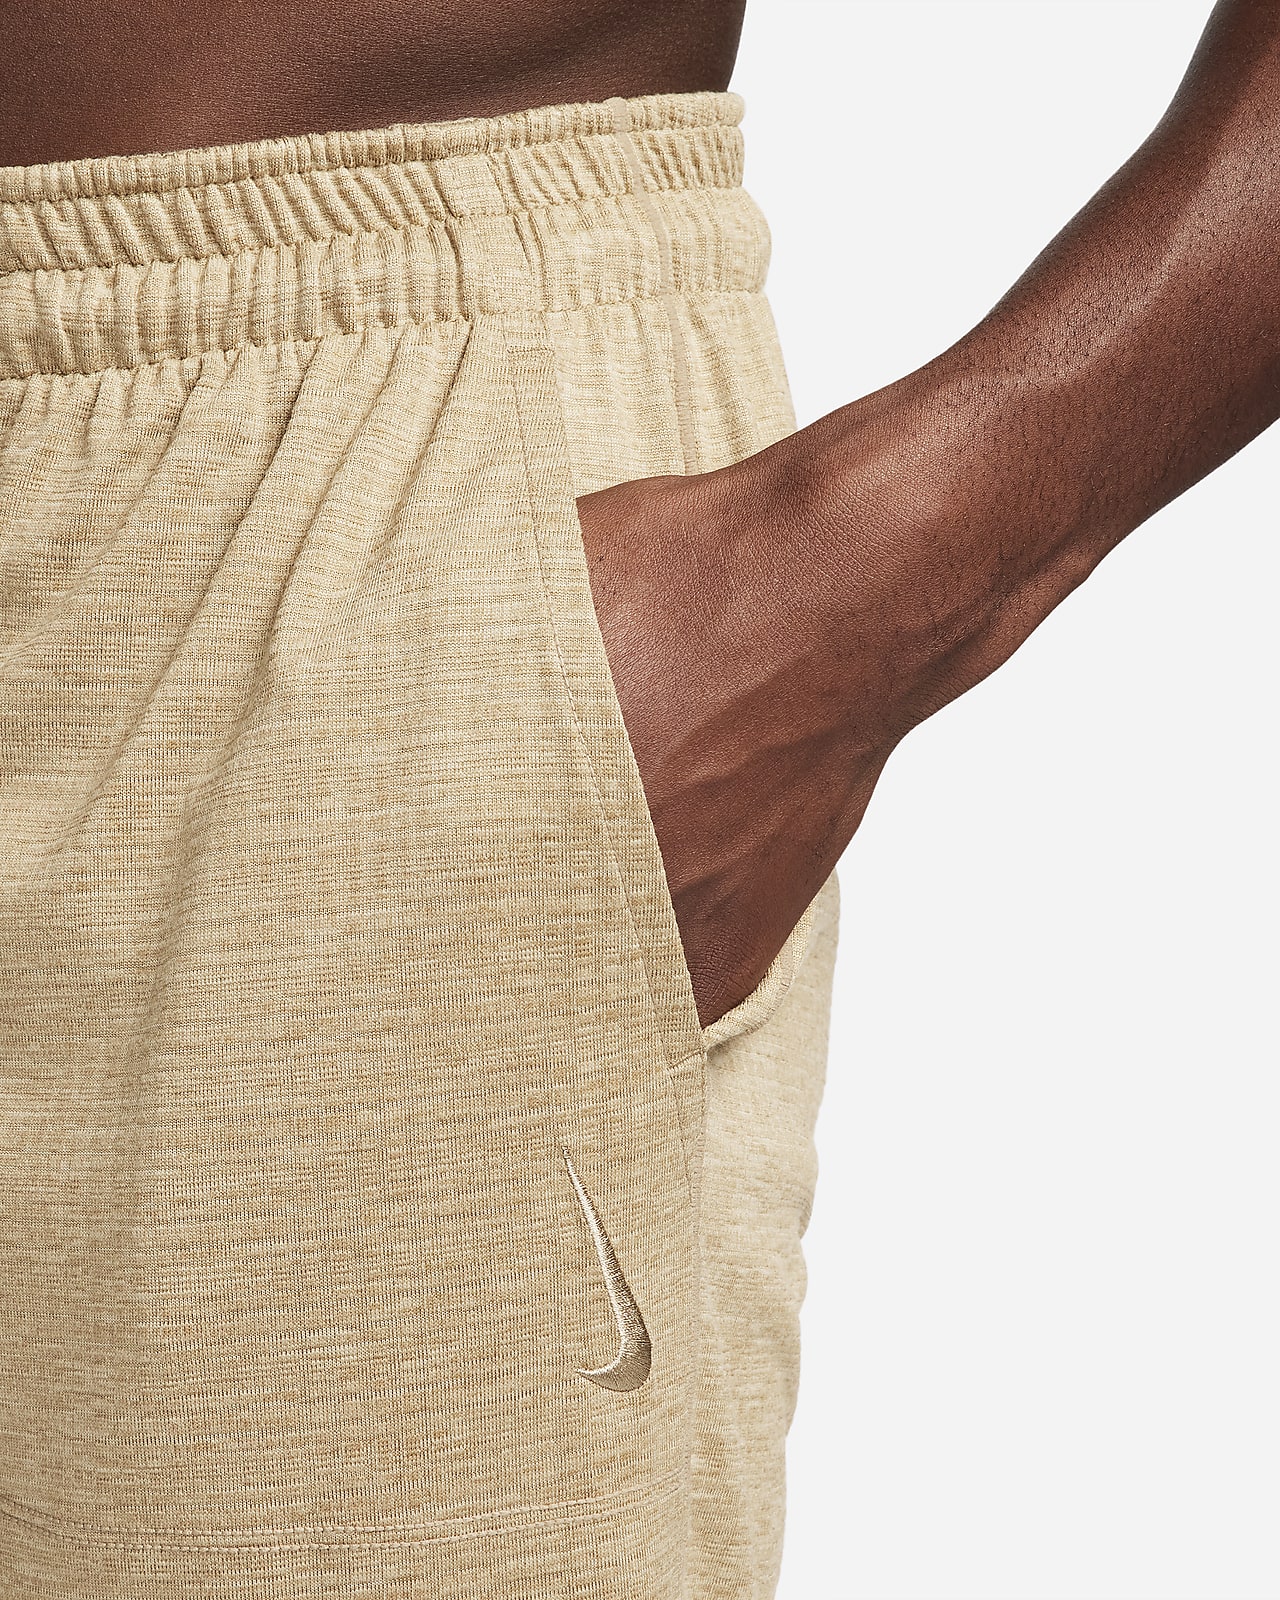 Nike Dri-Fit Yoga Ψηλόμεσο Παντελόνι Γυναικείας Φόρμας με Λάστιχο Μαύρο  Fleece DM7037-010